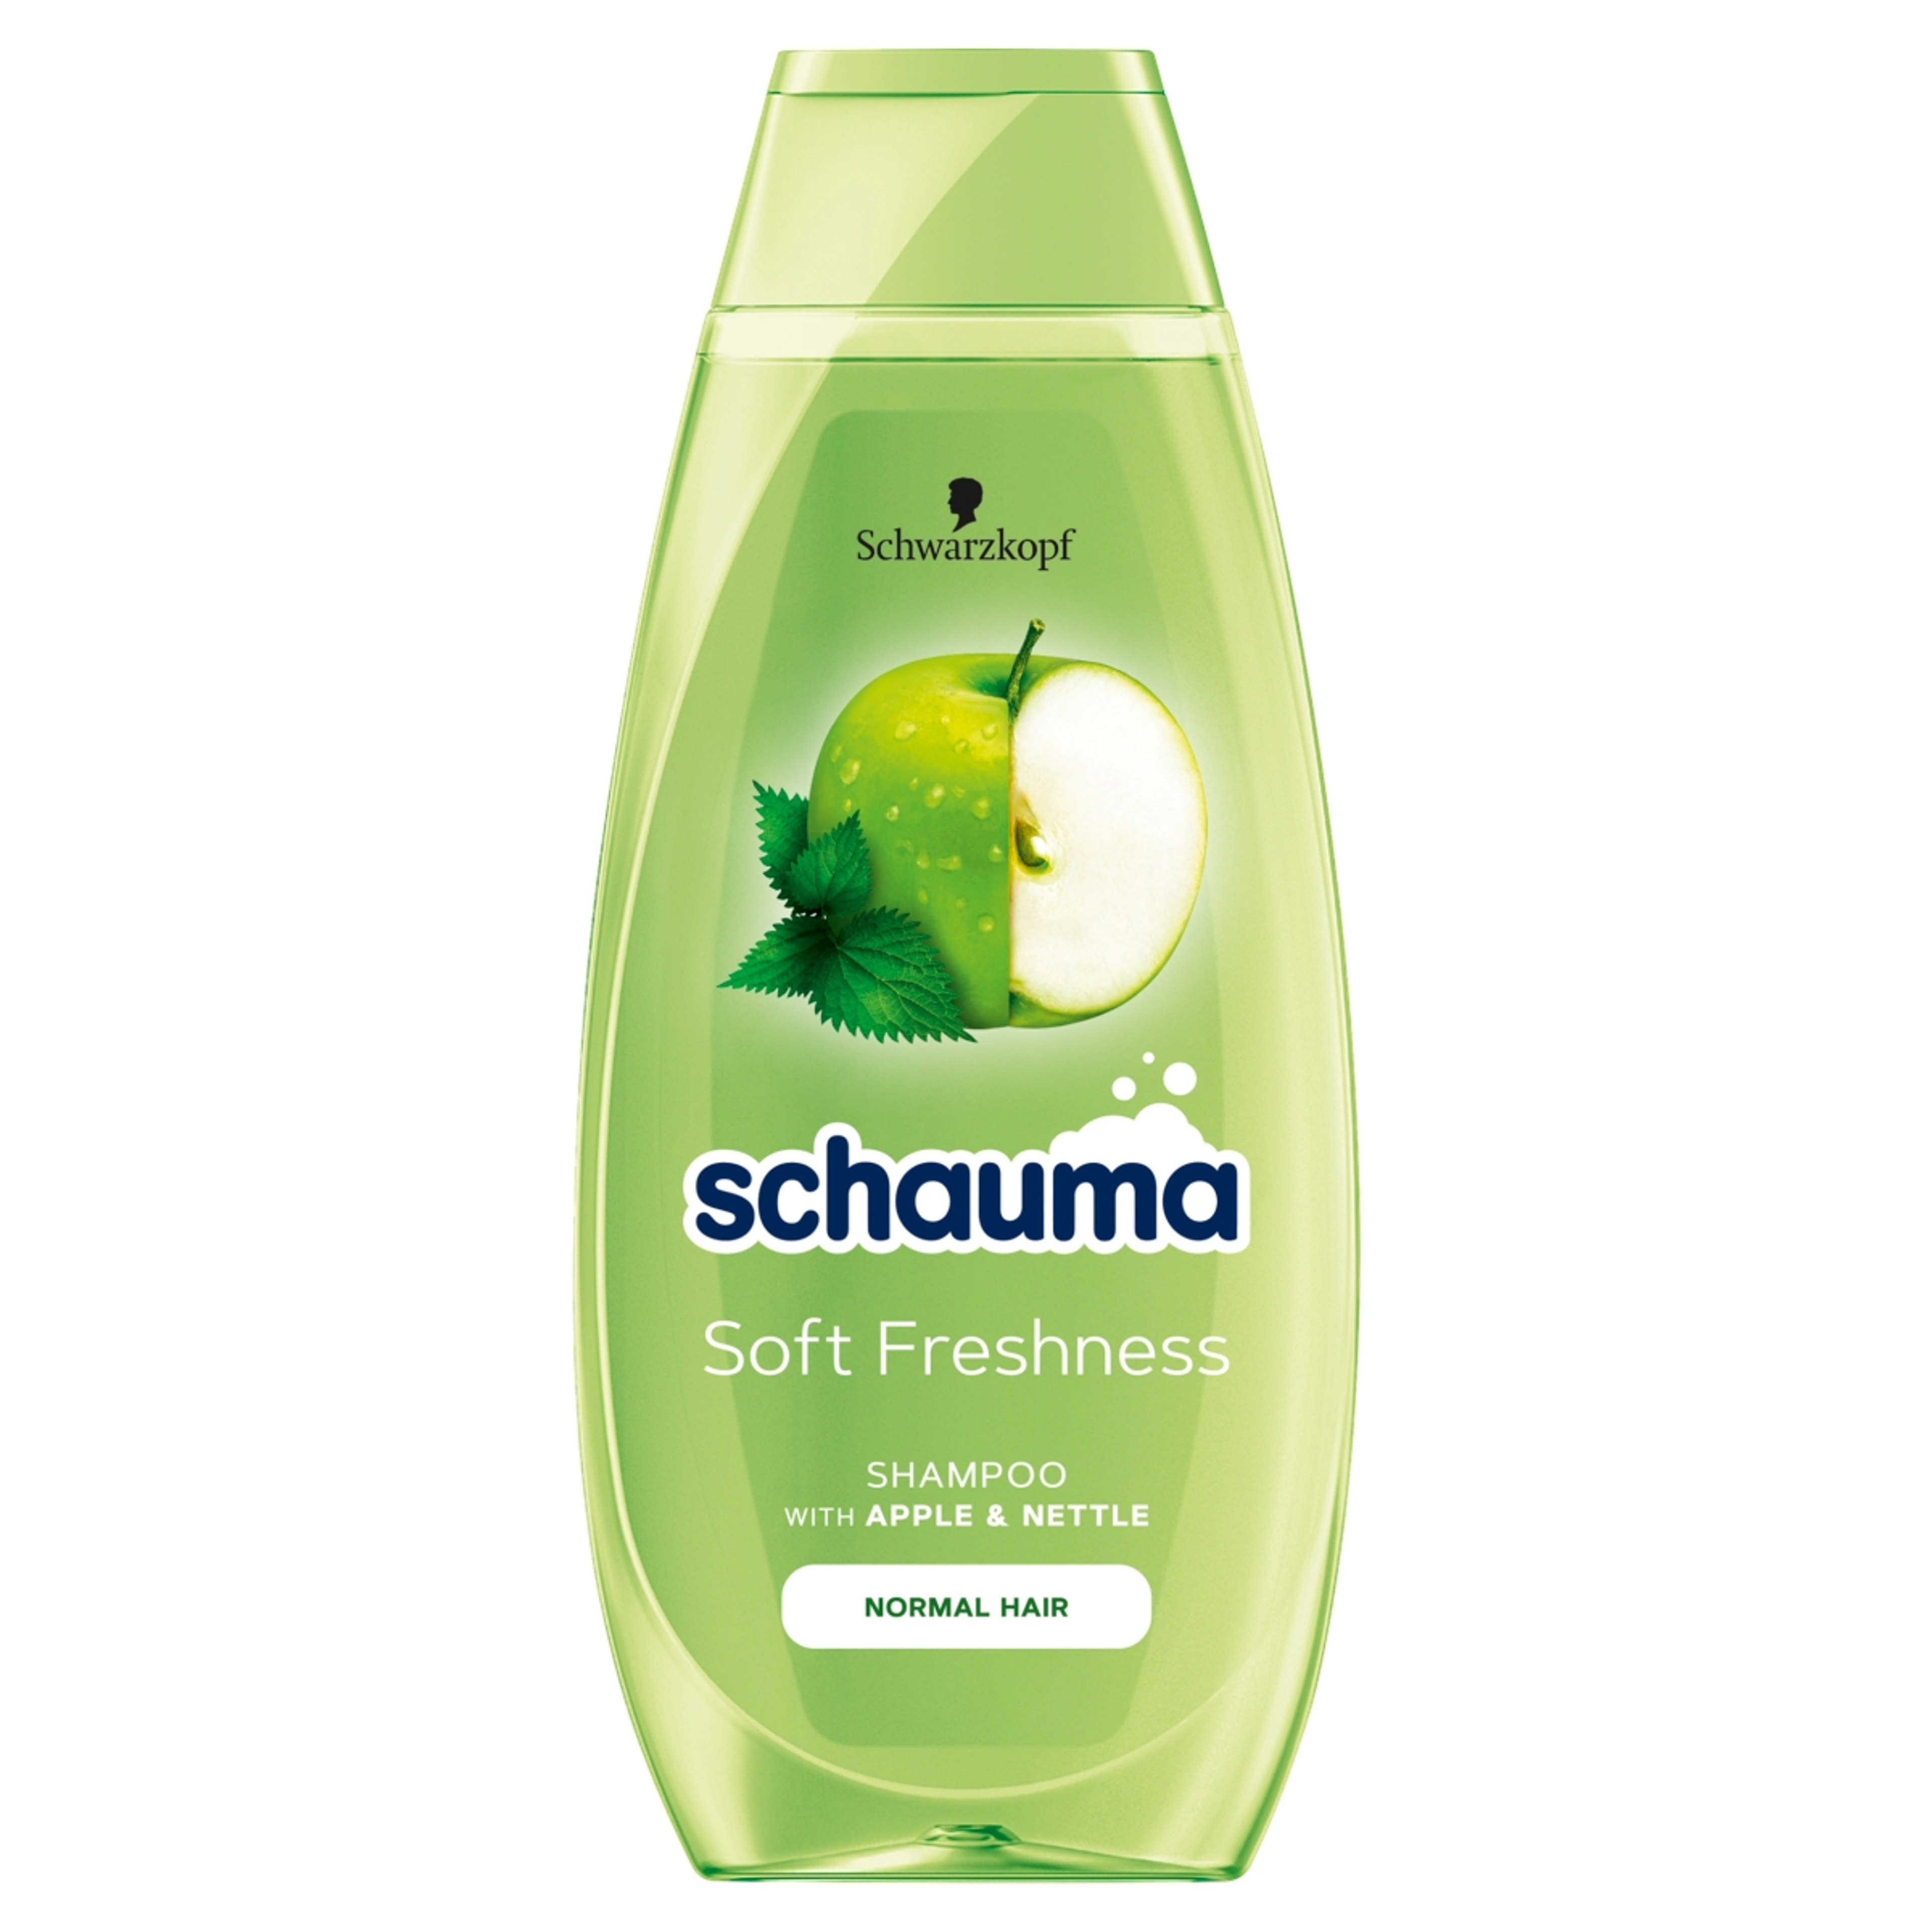 Schauma sampon Clean & Fresh zöld almával és csalánnal - 400 ml